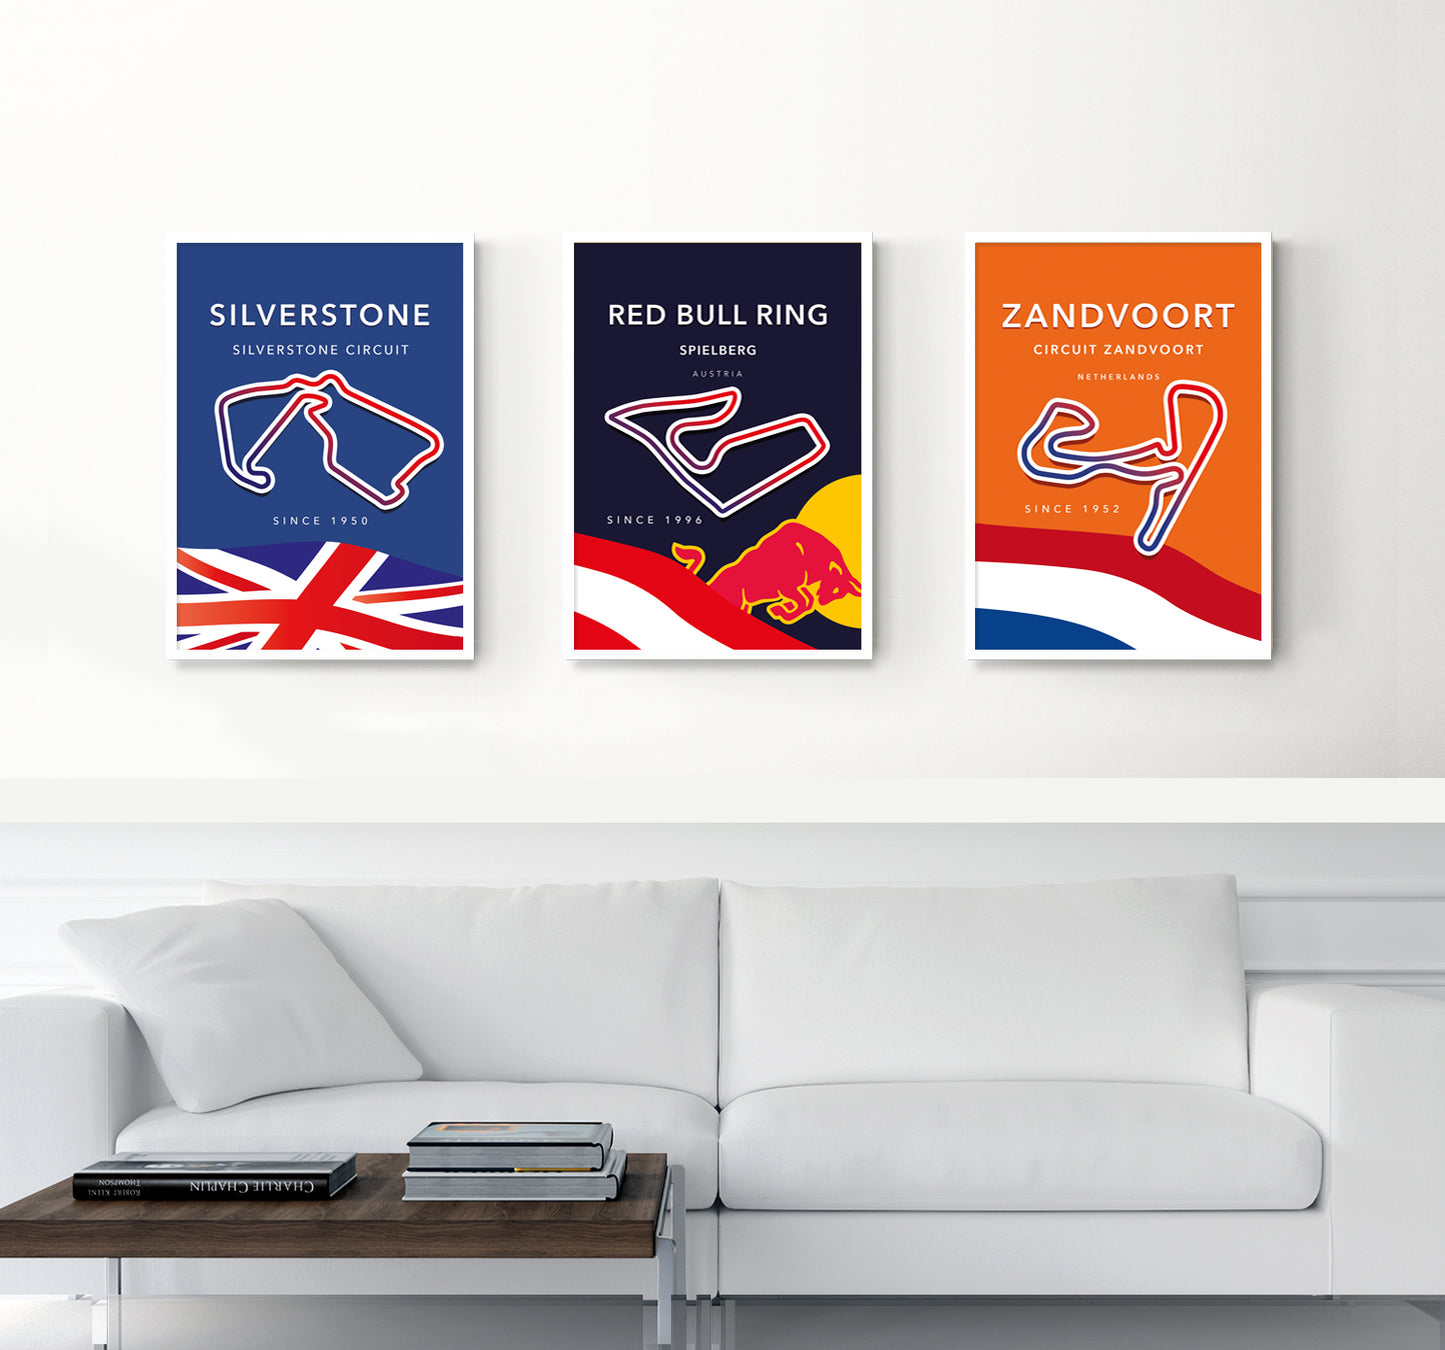 F1 Poster Red Bull Ring Circuit / Spielberg Formula1 / F1 Austrian Grand Prix